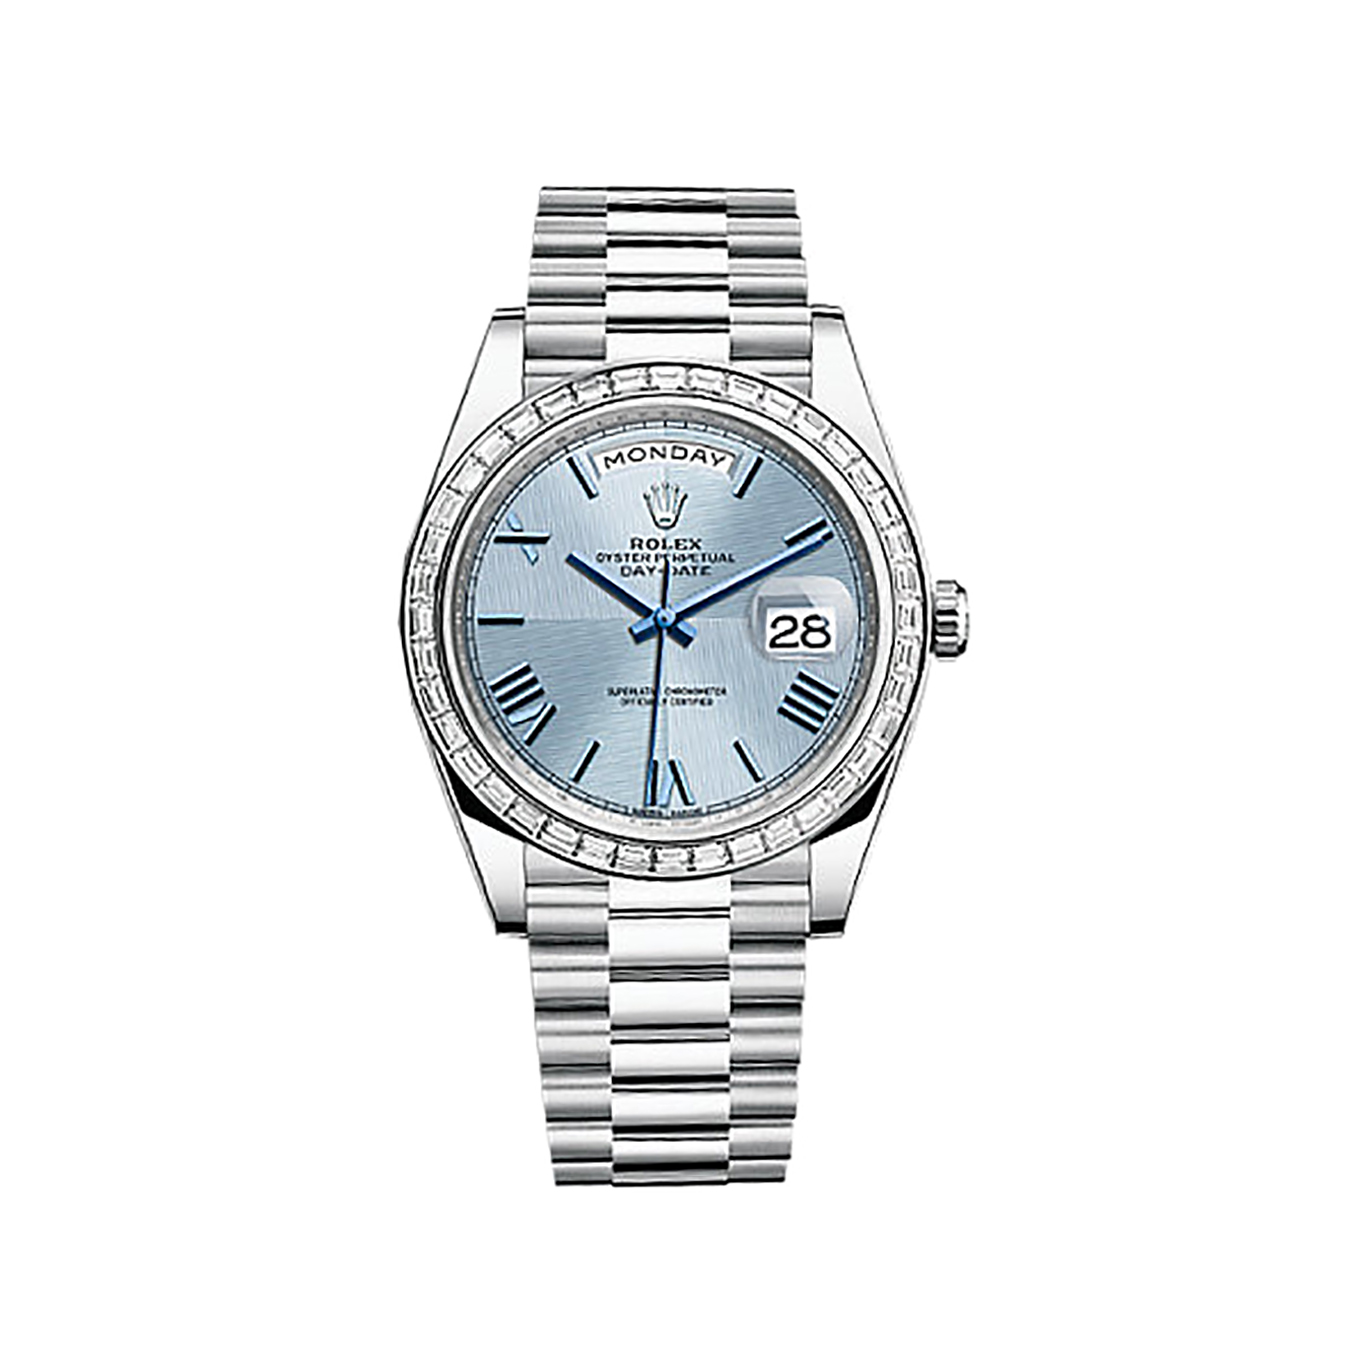 Day-Date 40 228396TBR Platinum & Diamonds Watch (Ice Blue, Quadrant Motif)